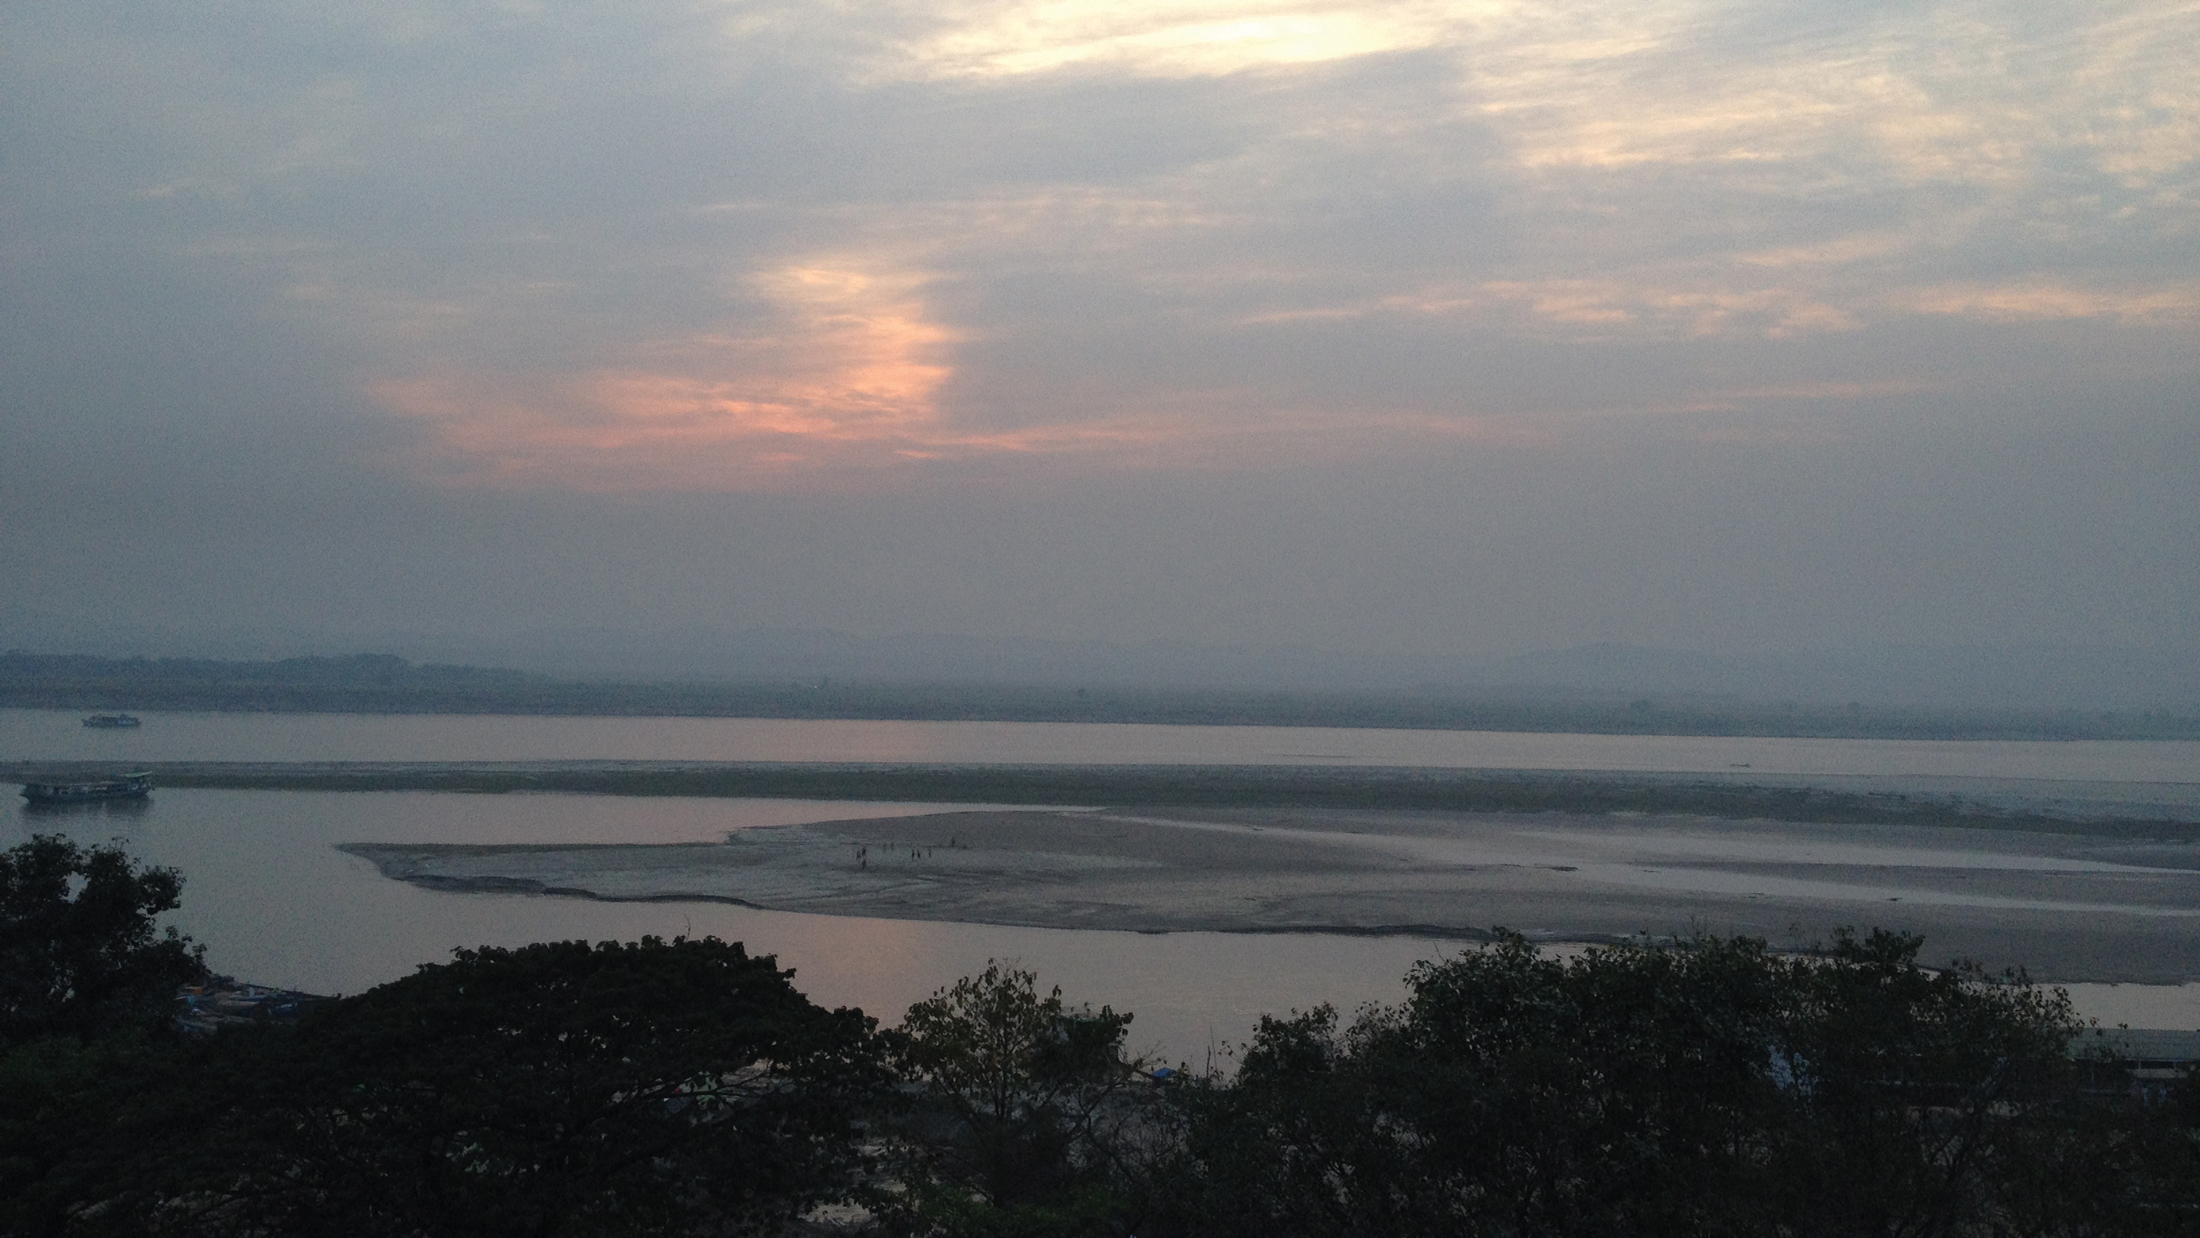 The Irrawaddy at dusk. Photo © Joerg Hartmann